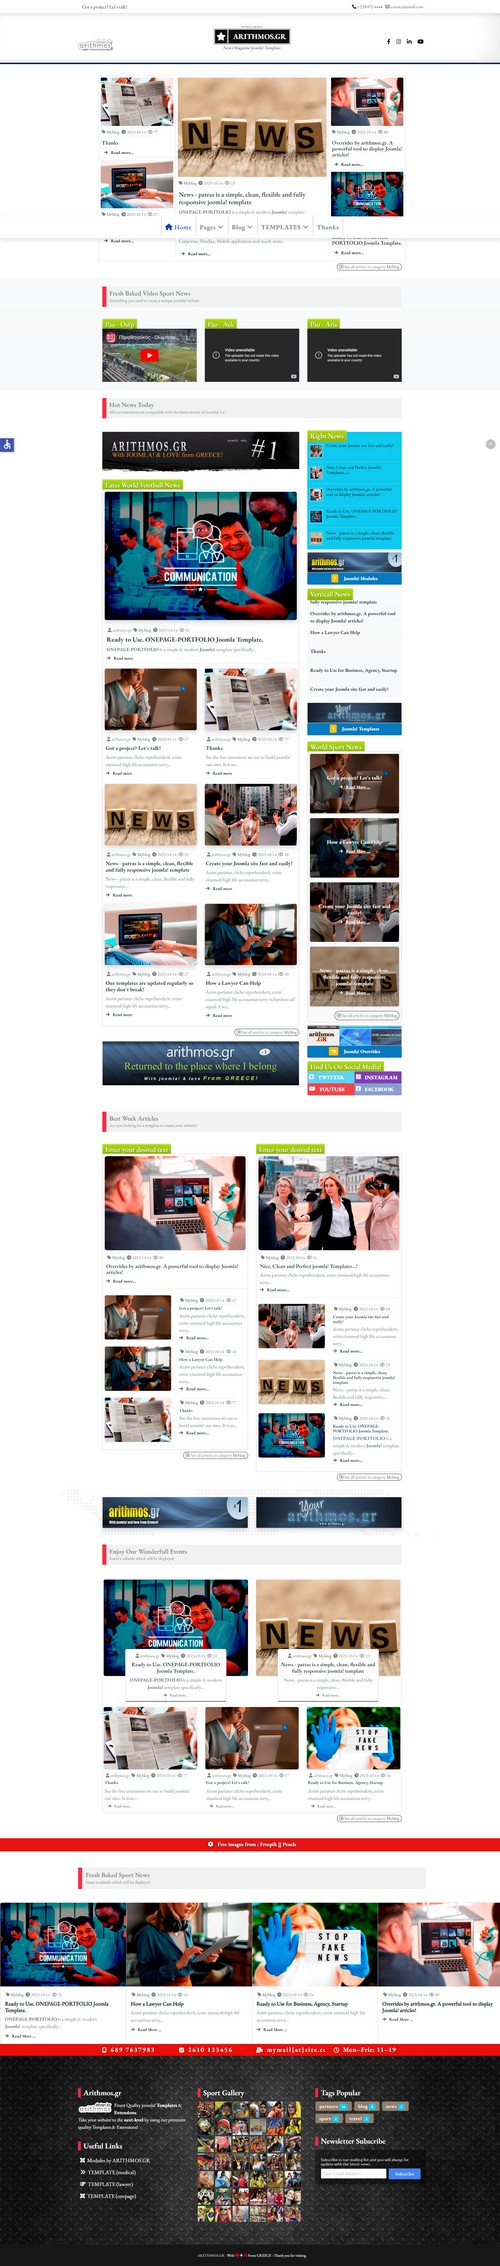 News - Patras - News, Magazines, Newspapers Joomla template